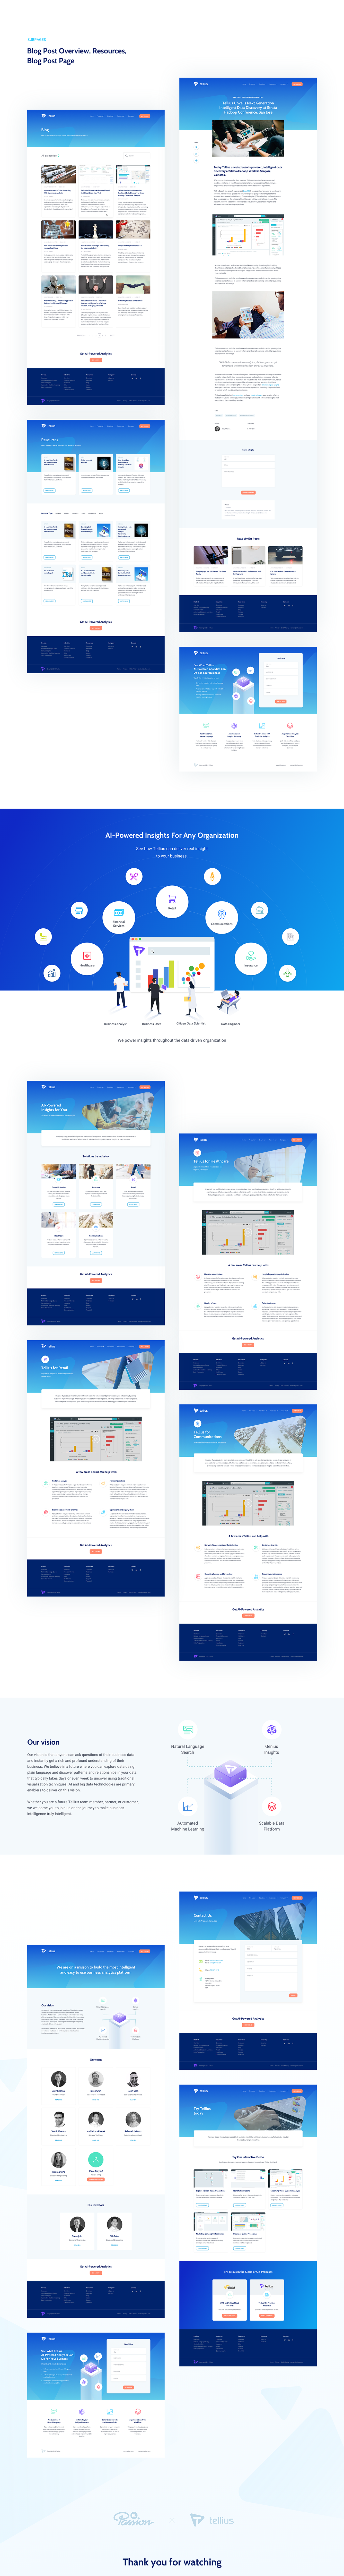 analytics Platform business intelligence illustrations branding  landing visual Web design